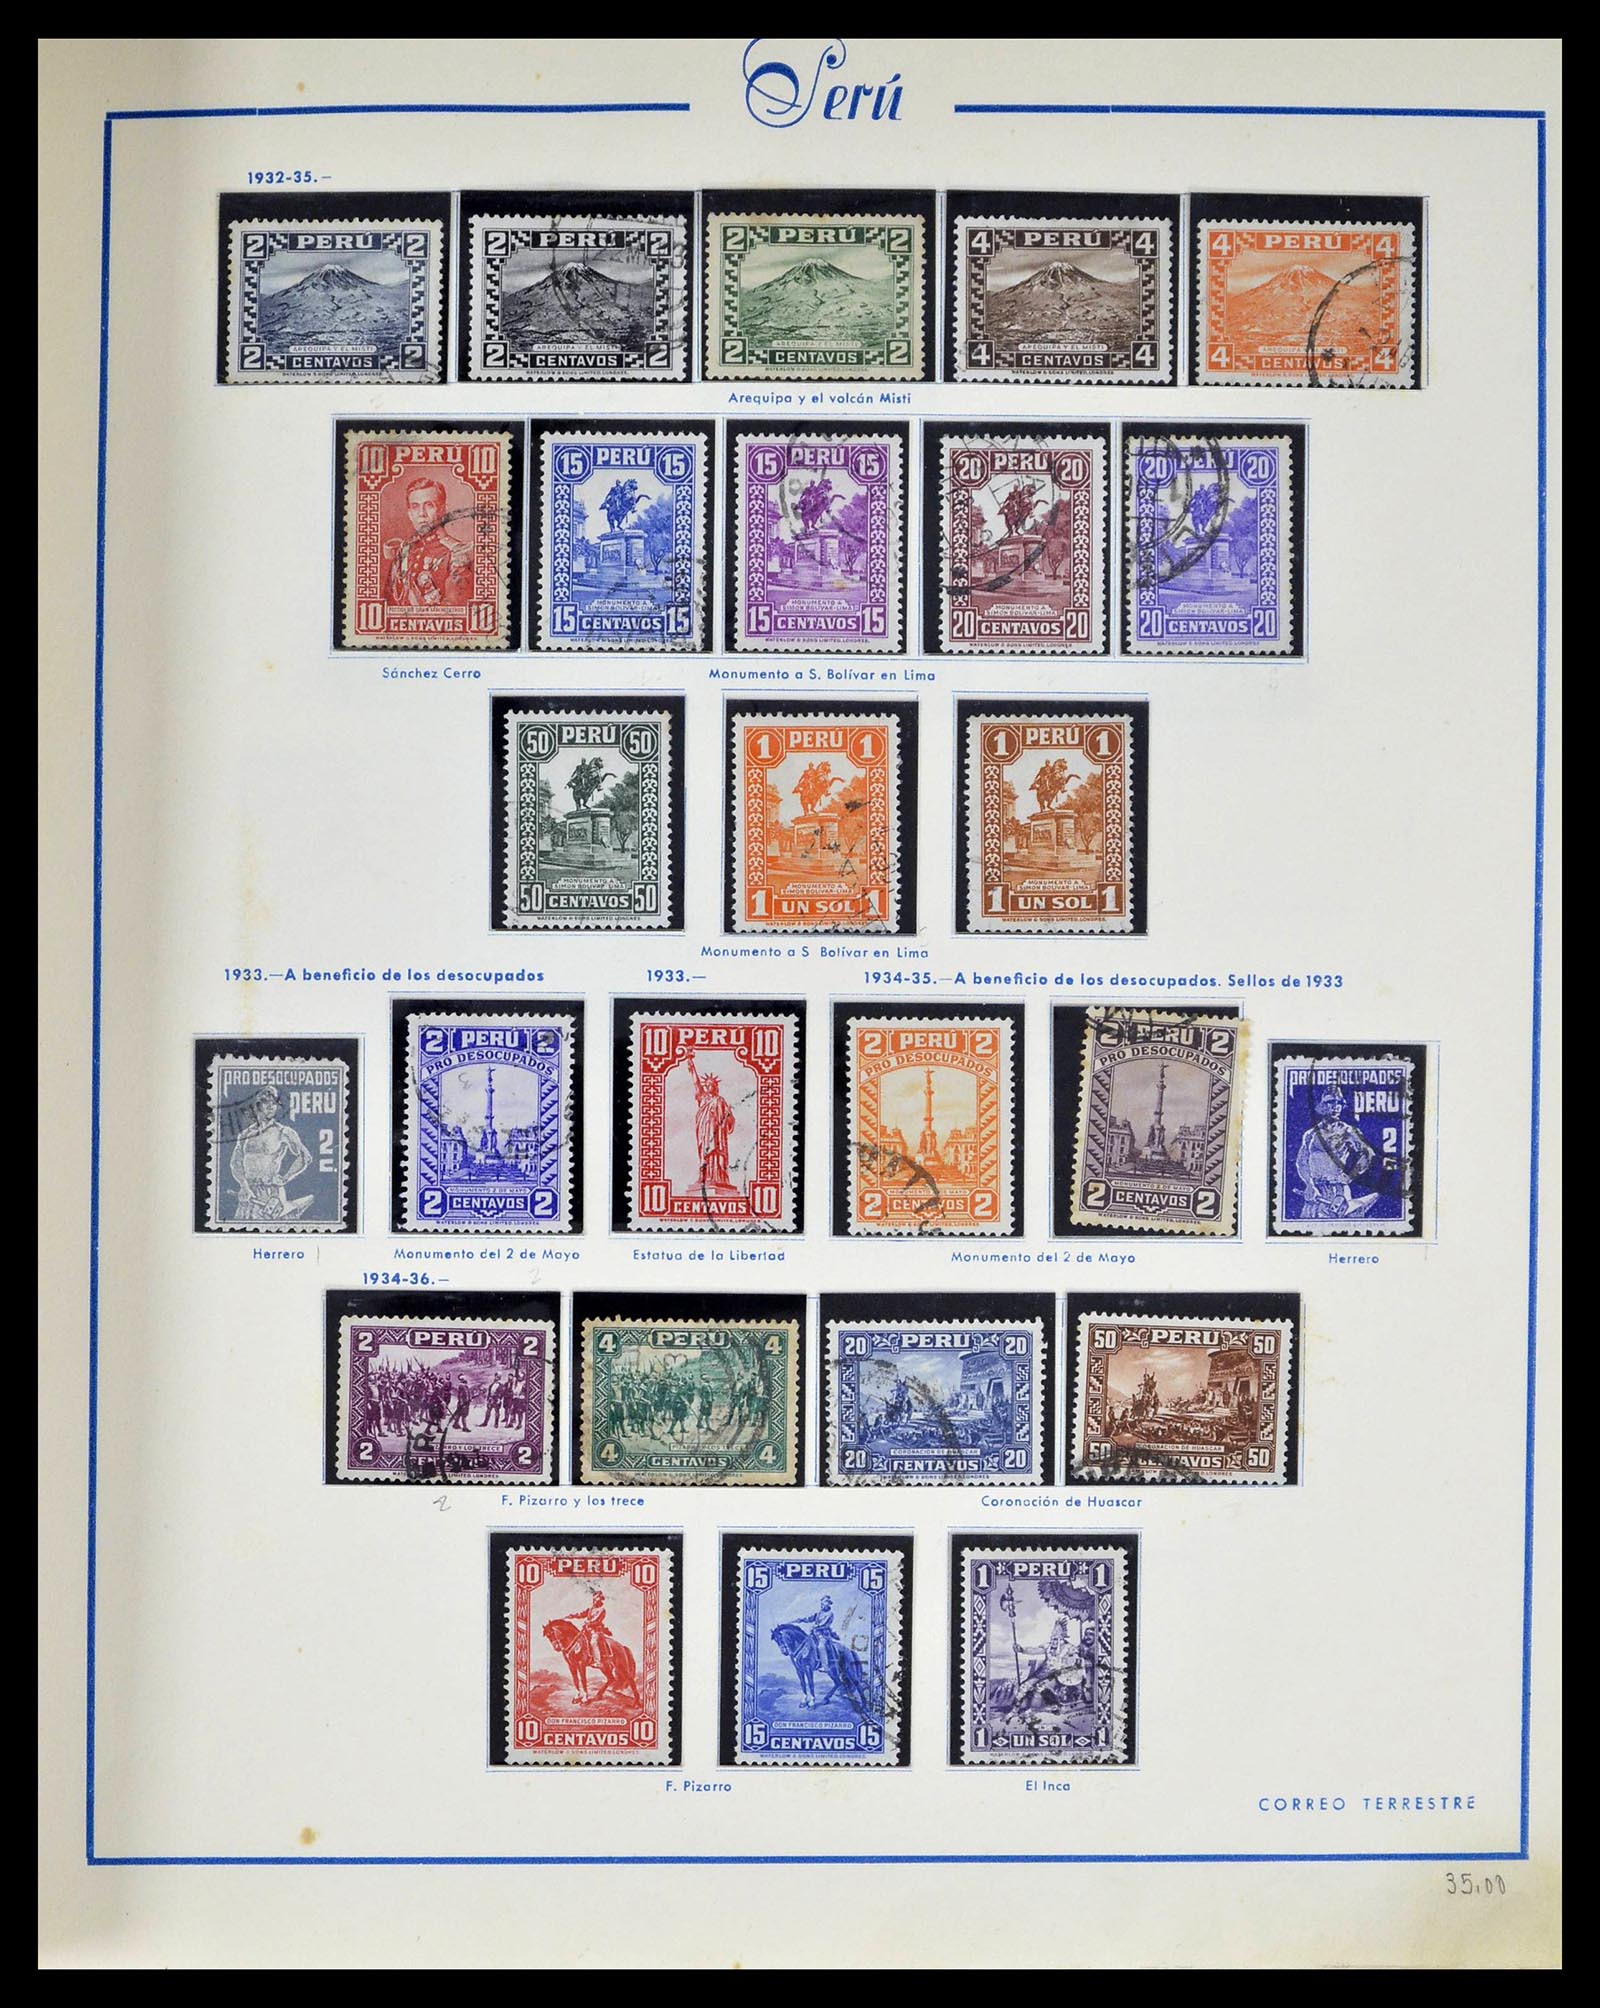 39214 0016 - Stamp collection 39214 Peru 1857-1981.